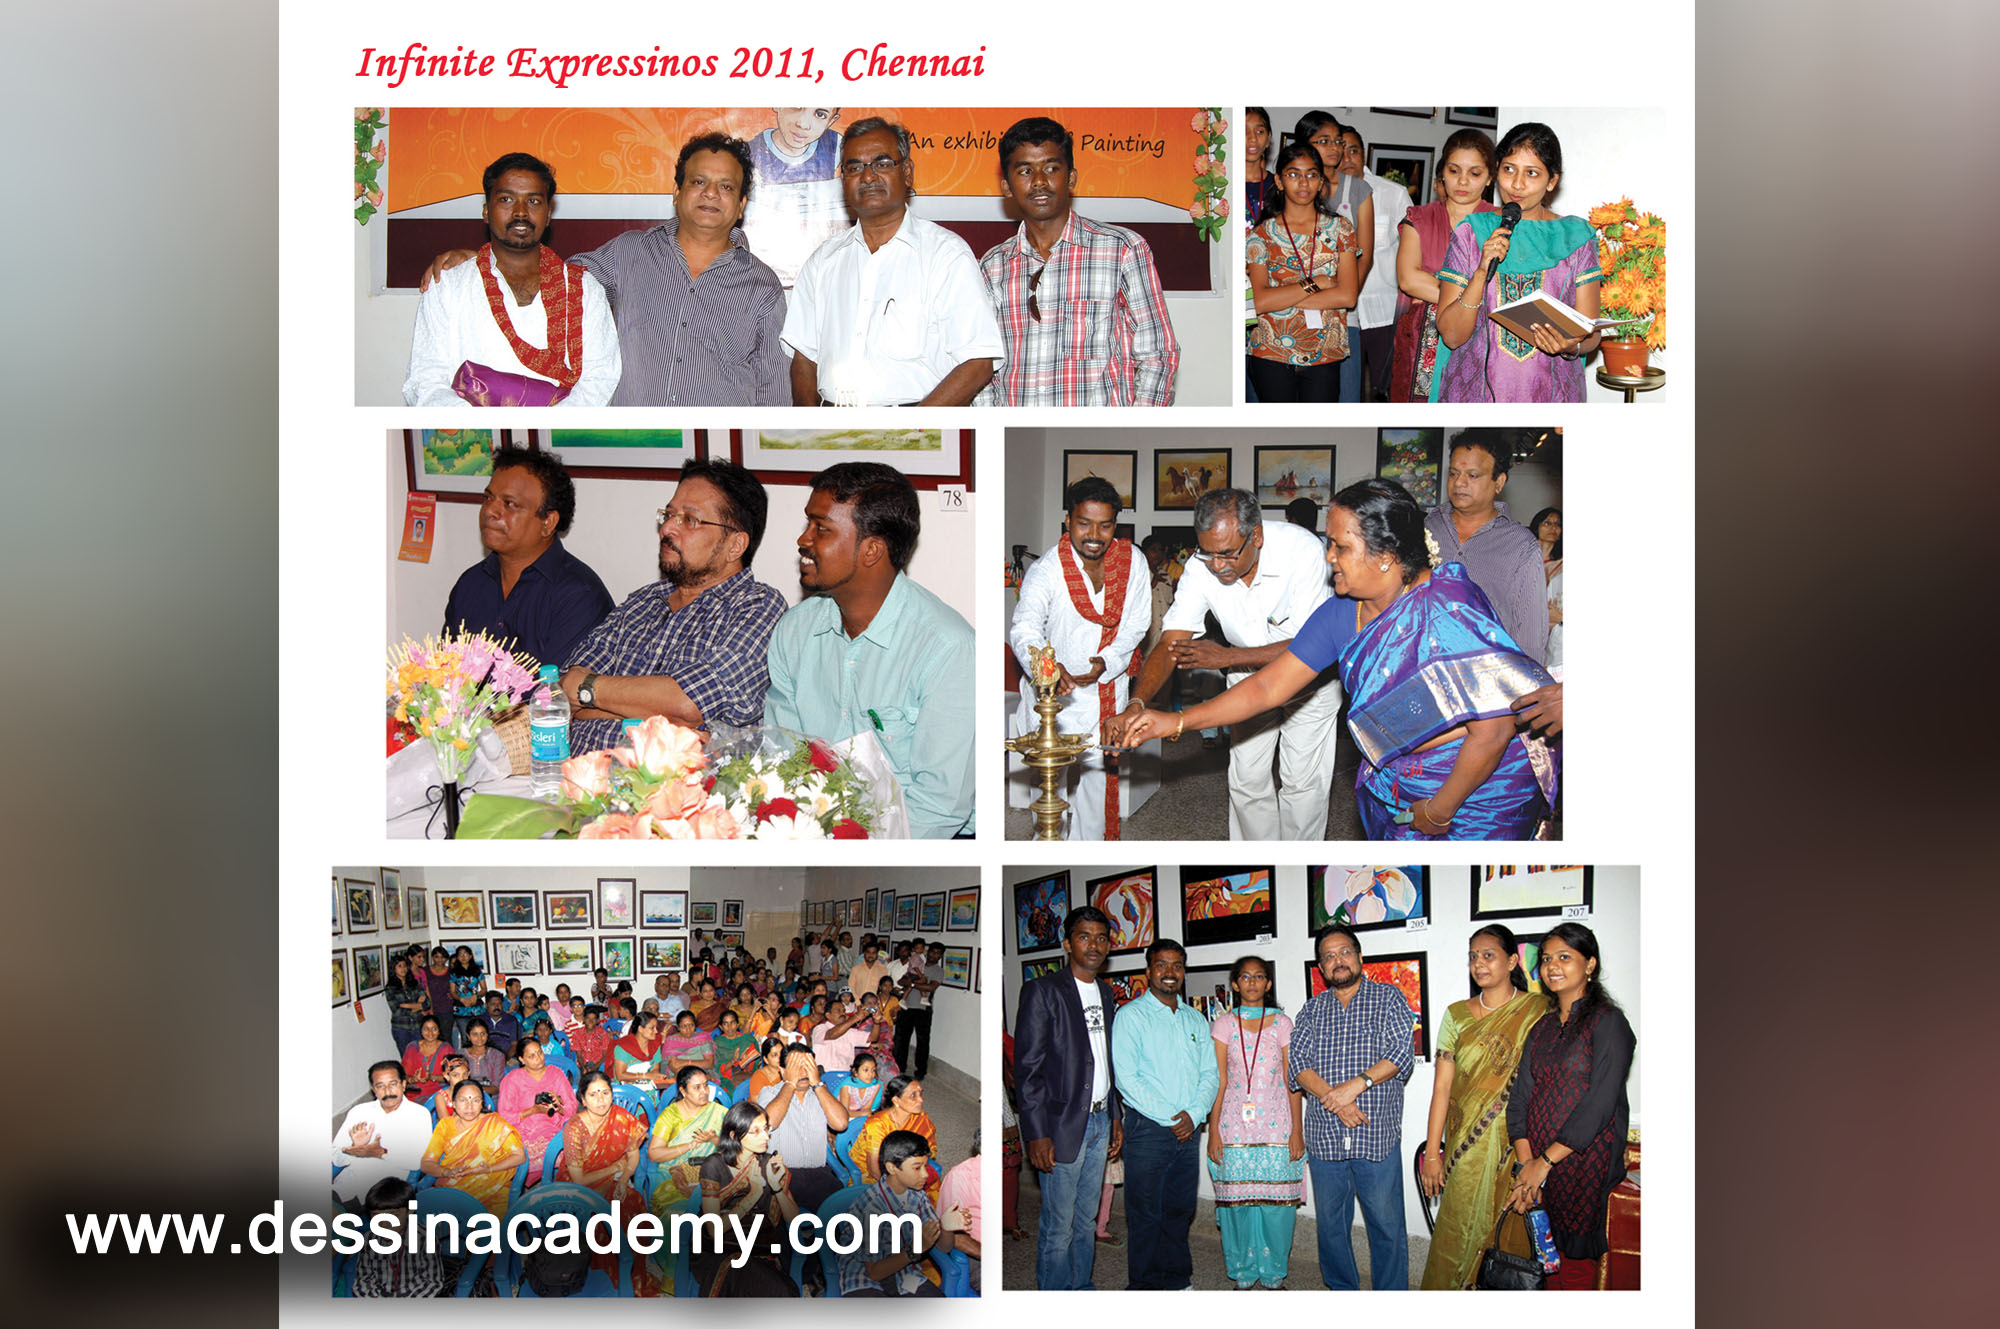 Dessin School of Arts Event Gallery 5, Drawing classes in Bangalore, Surya CityDessin School of Arts